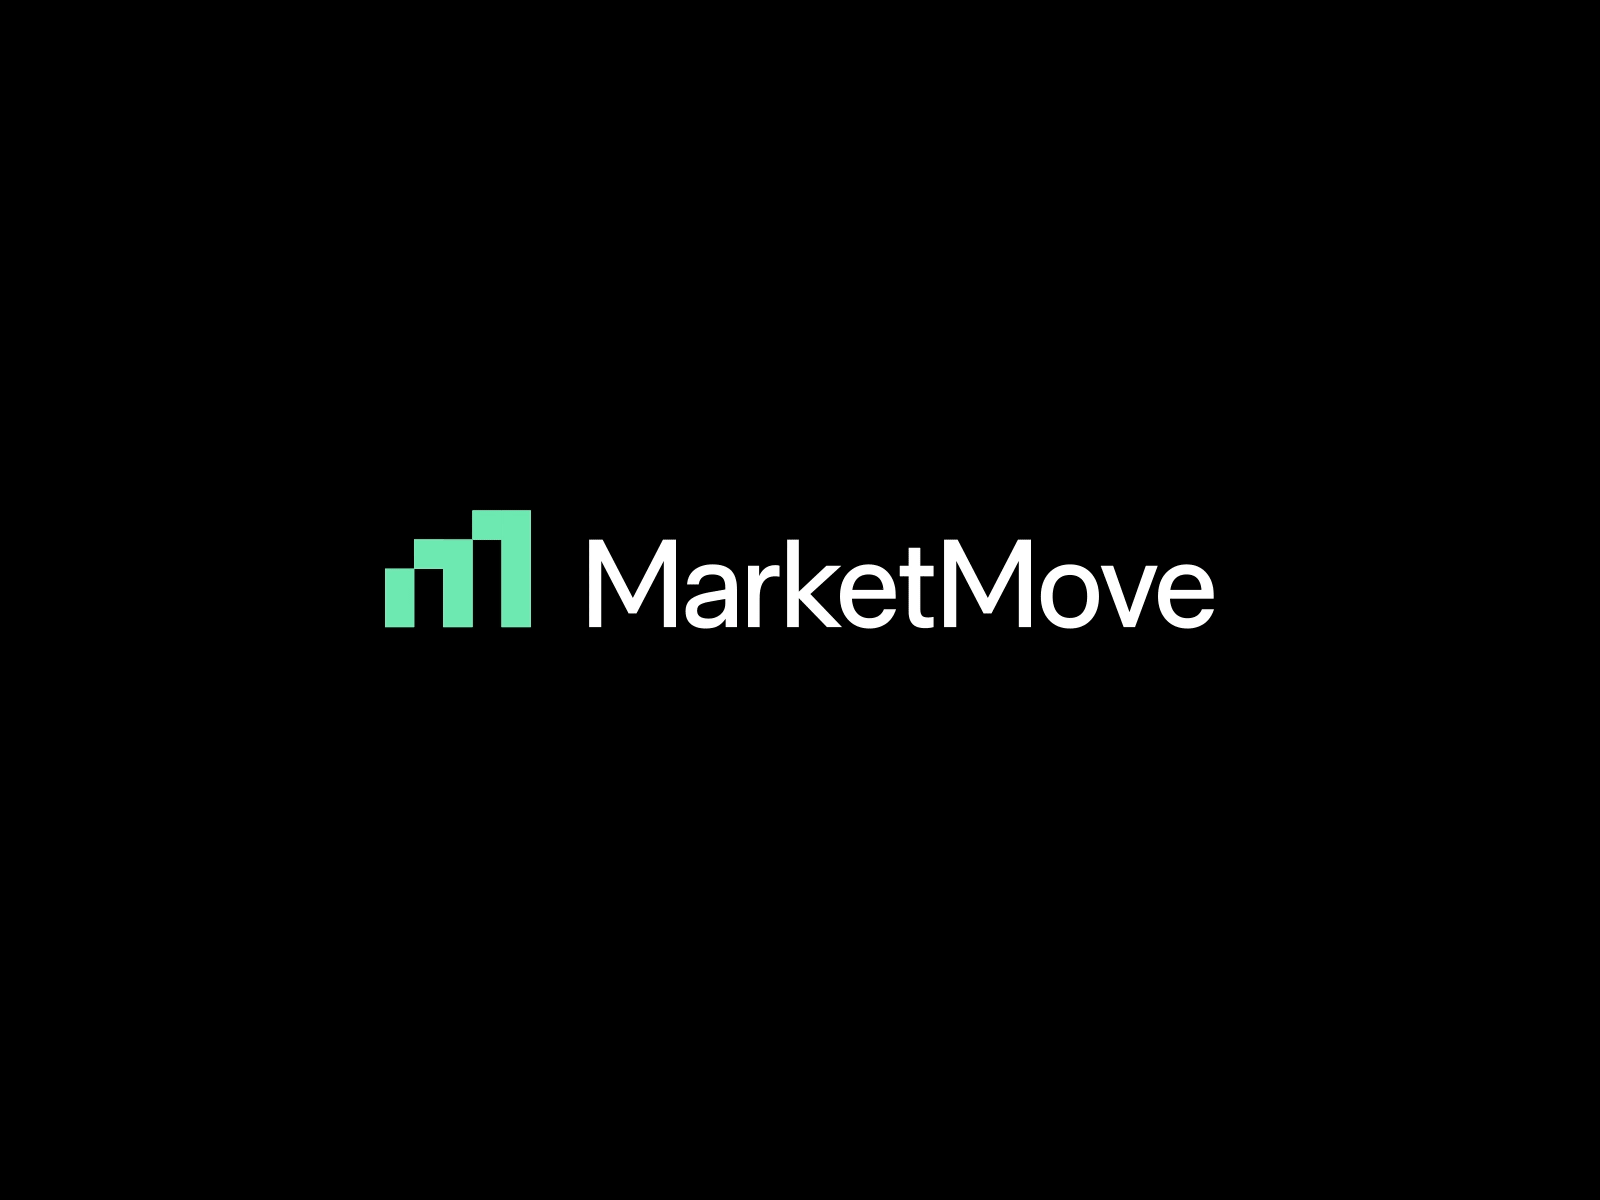 MarketMove dynamic identity